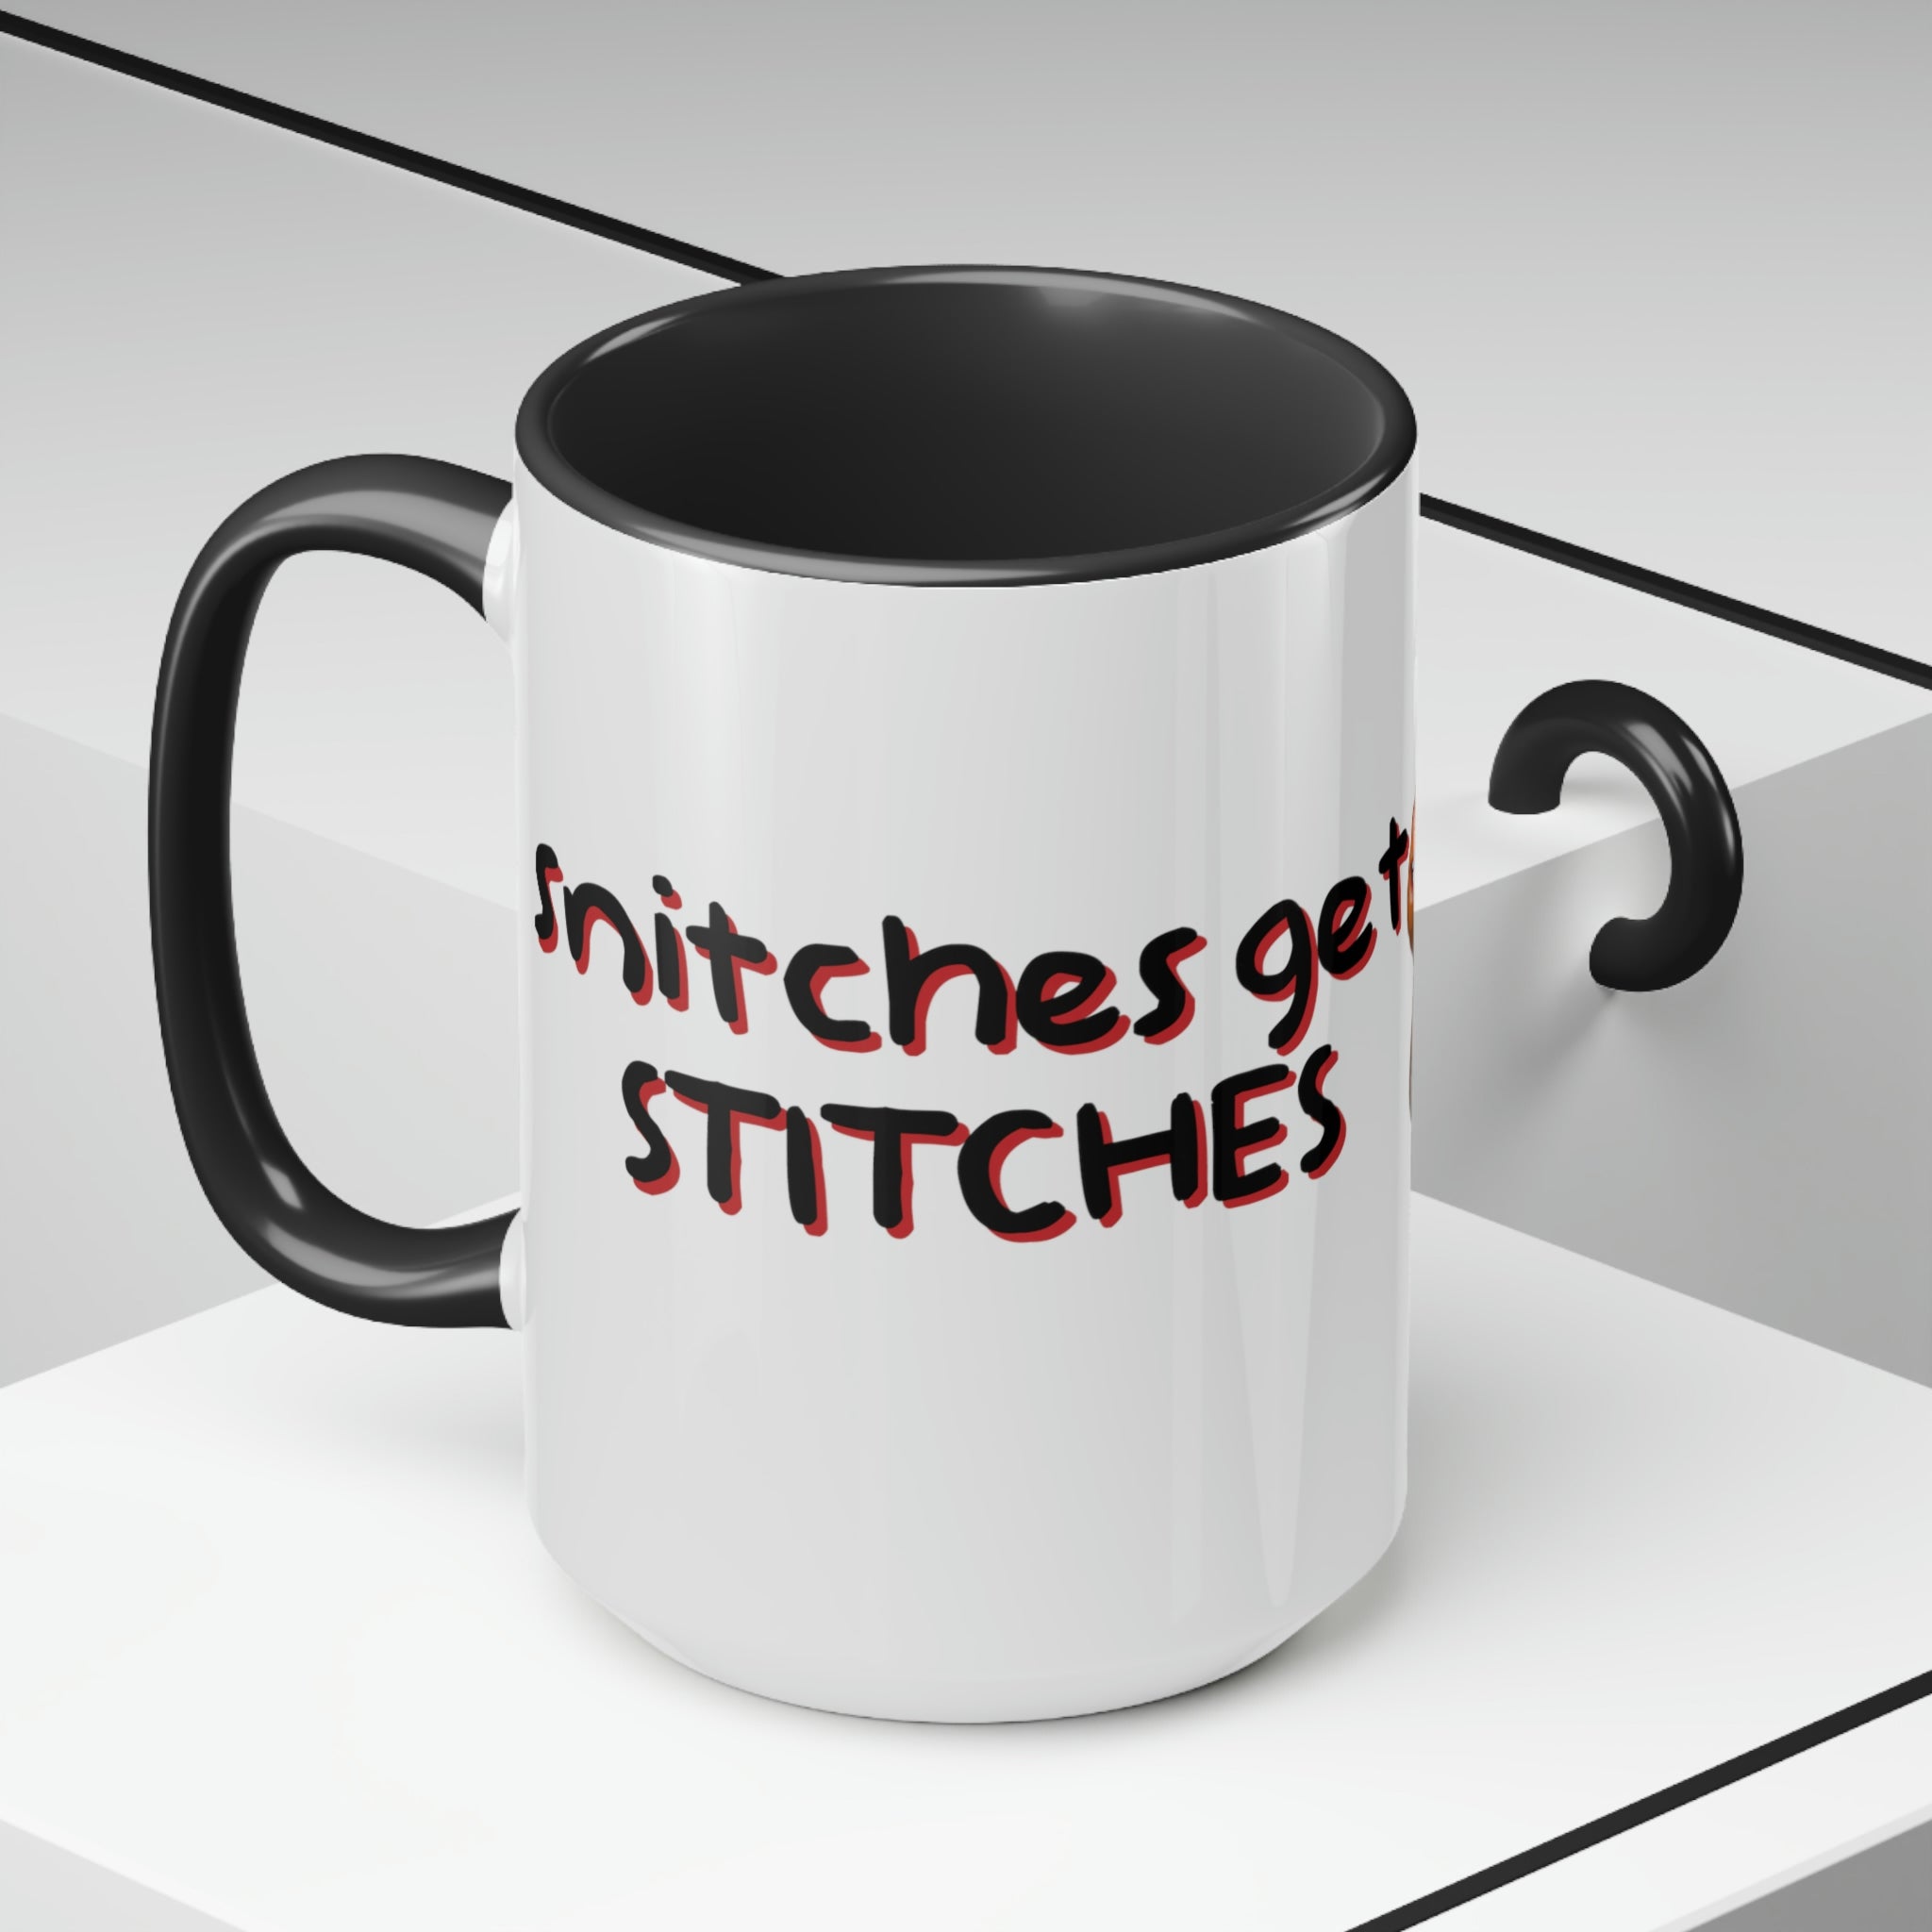 Snitches Get Stiches Mug, 15oz